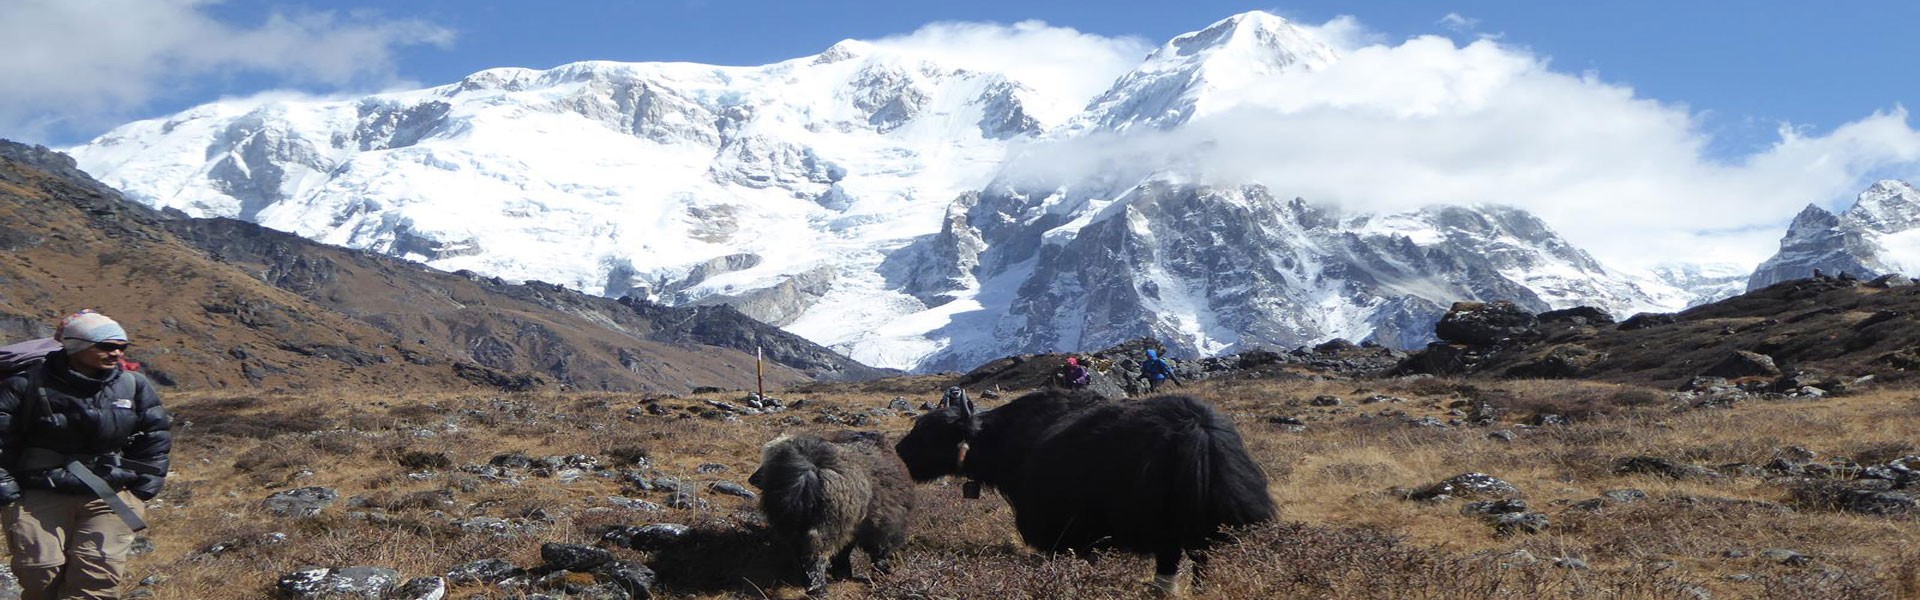 off the Beaten Trekking Trails Nepal